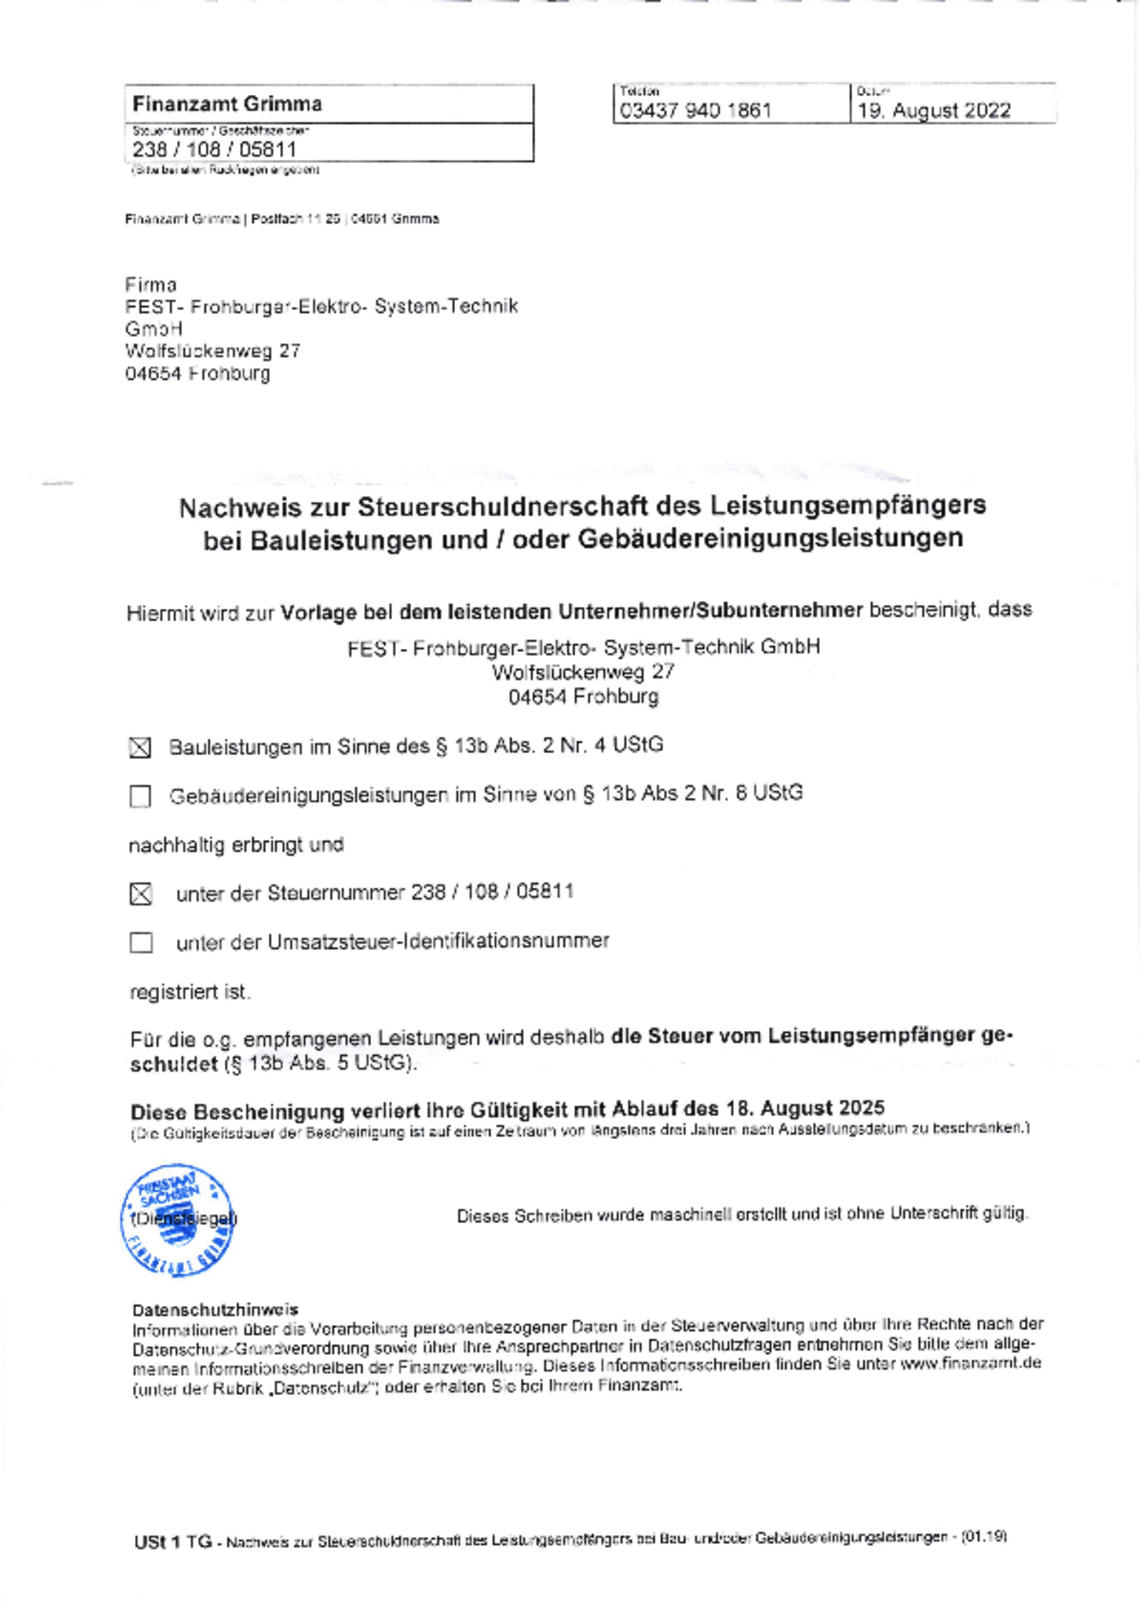 FA-Nachweis Steuerschuldnerschaft, 18.08.2025